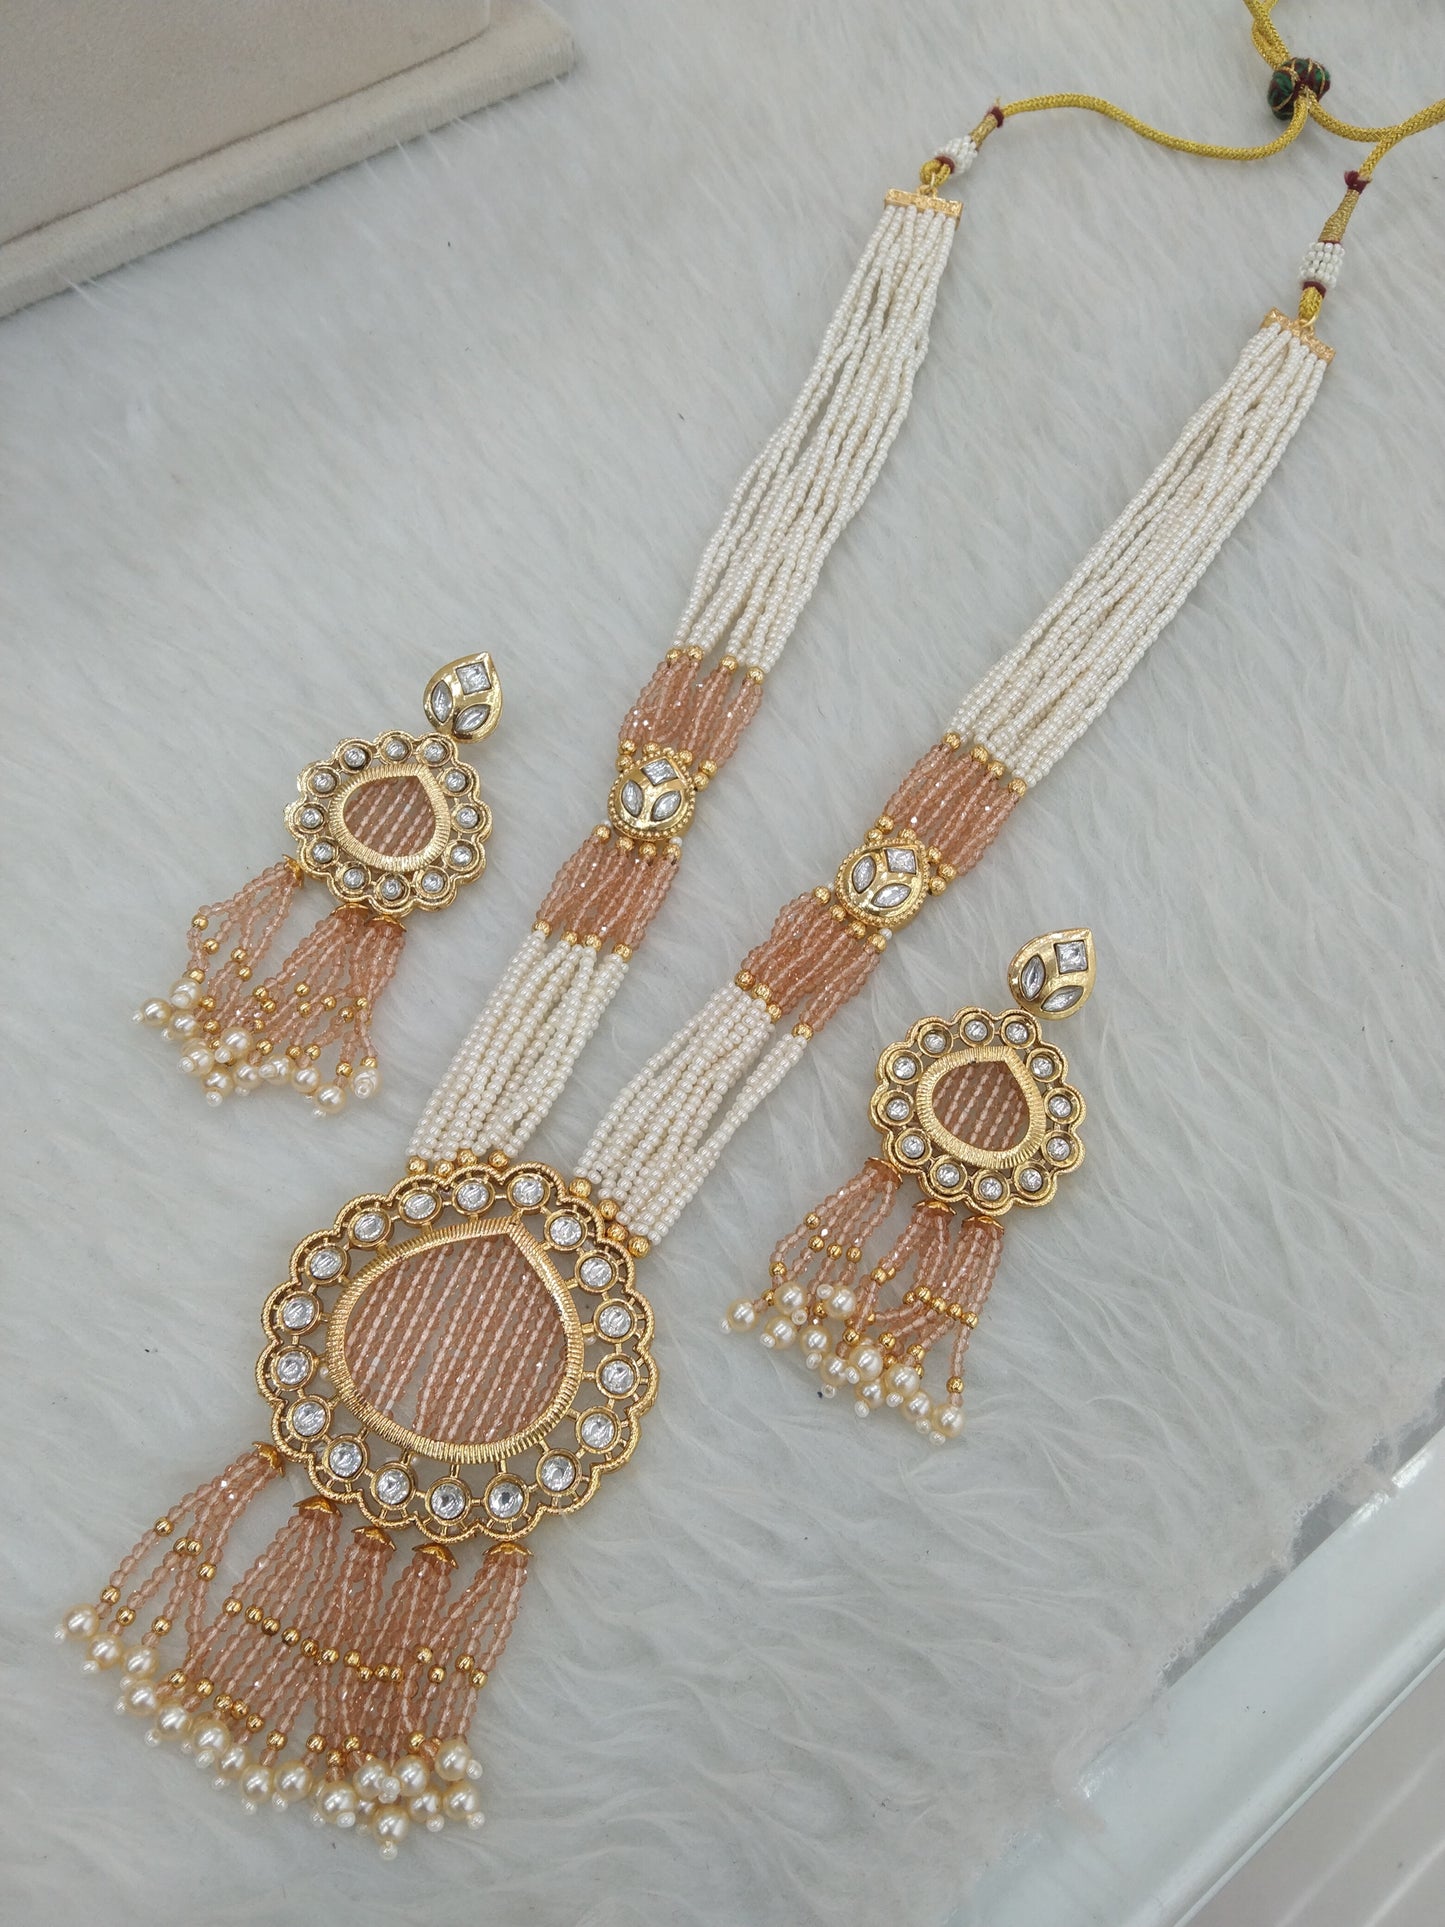 Gold Rani Haar Necklace Jewellery Set/ Ivory Gold Indian Necklace Set/ Indian Jewellery/Muslim Long Necklace sites Set